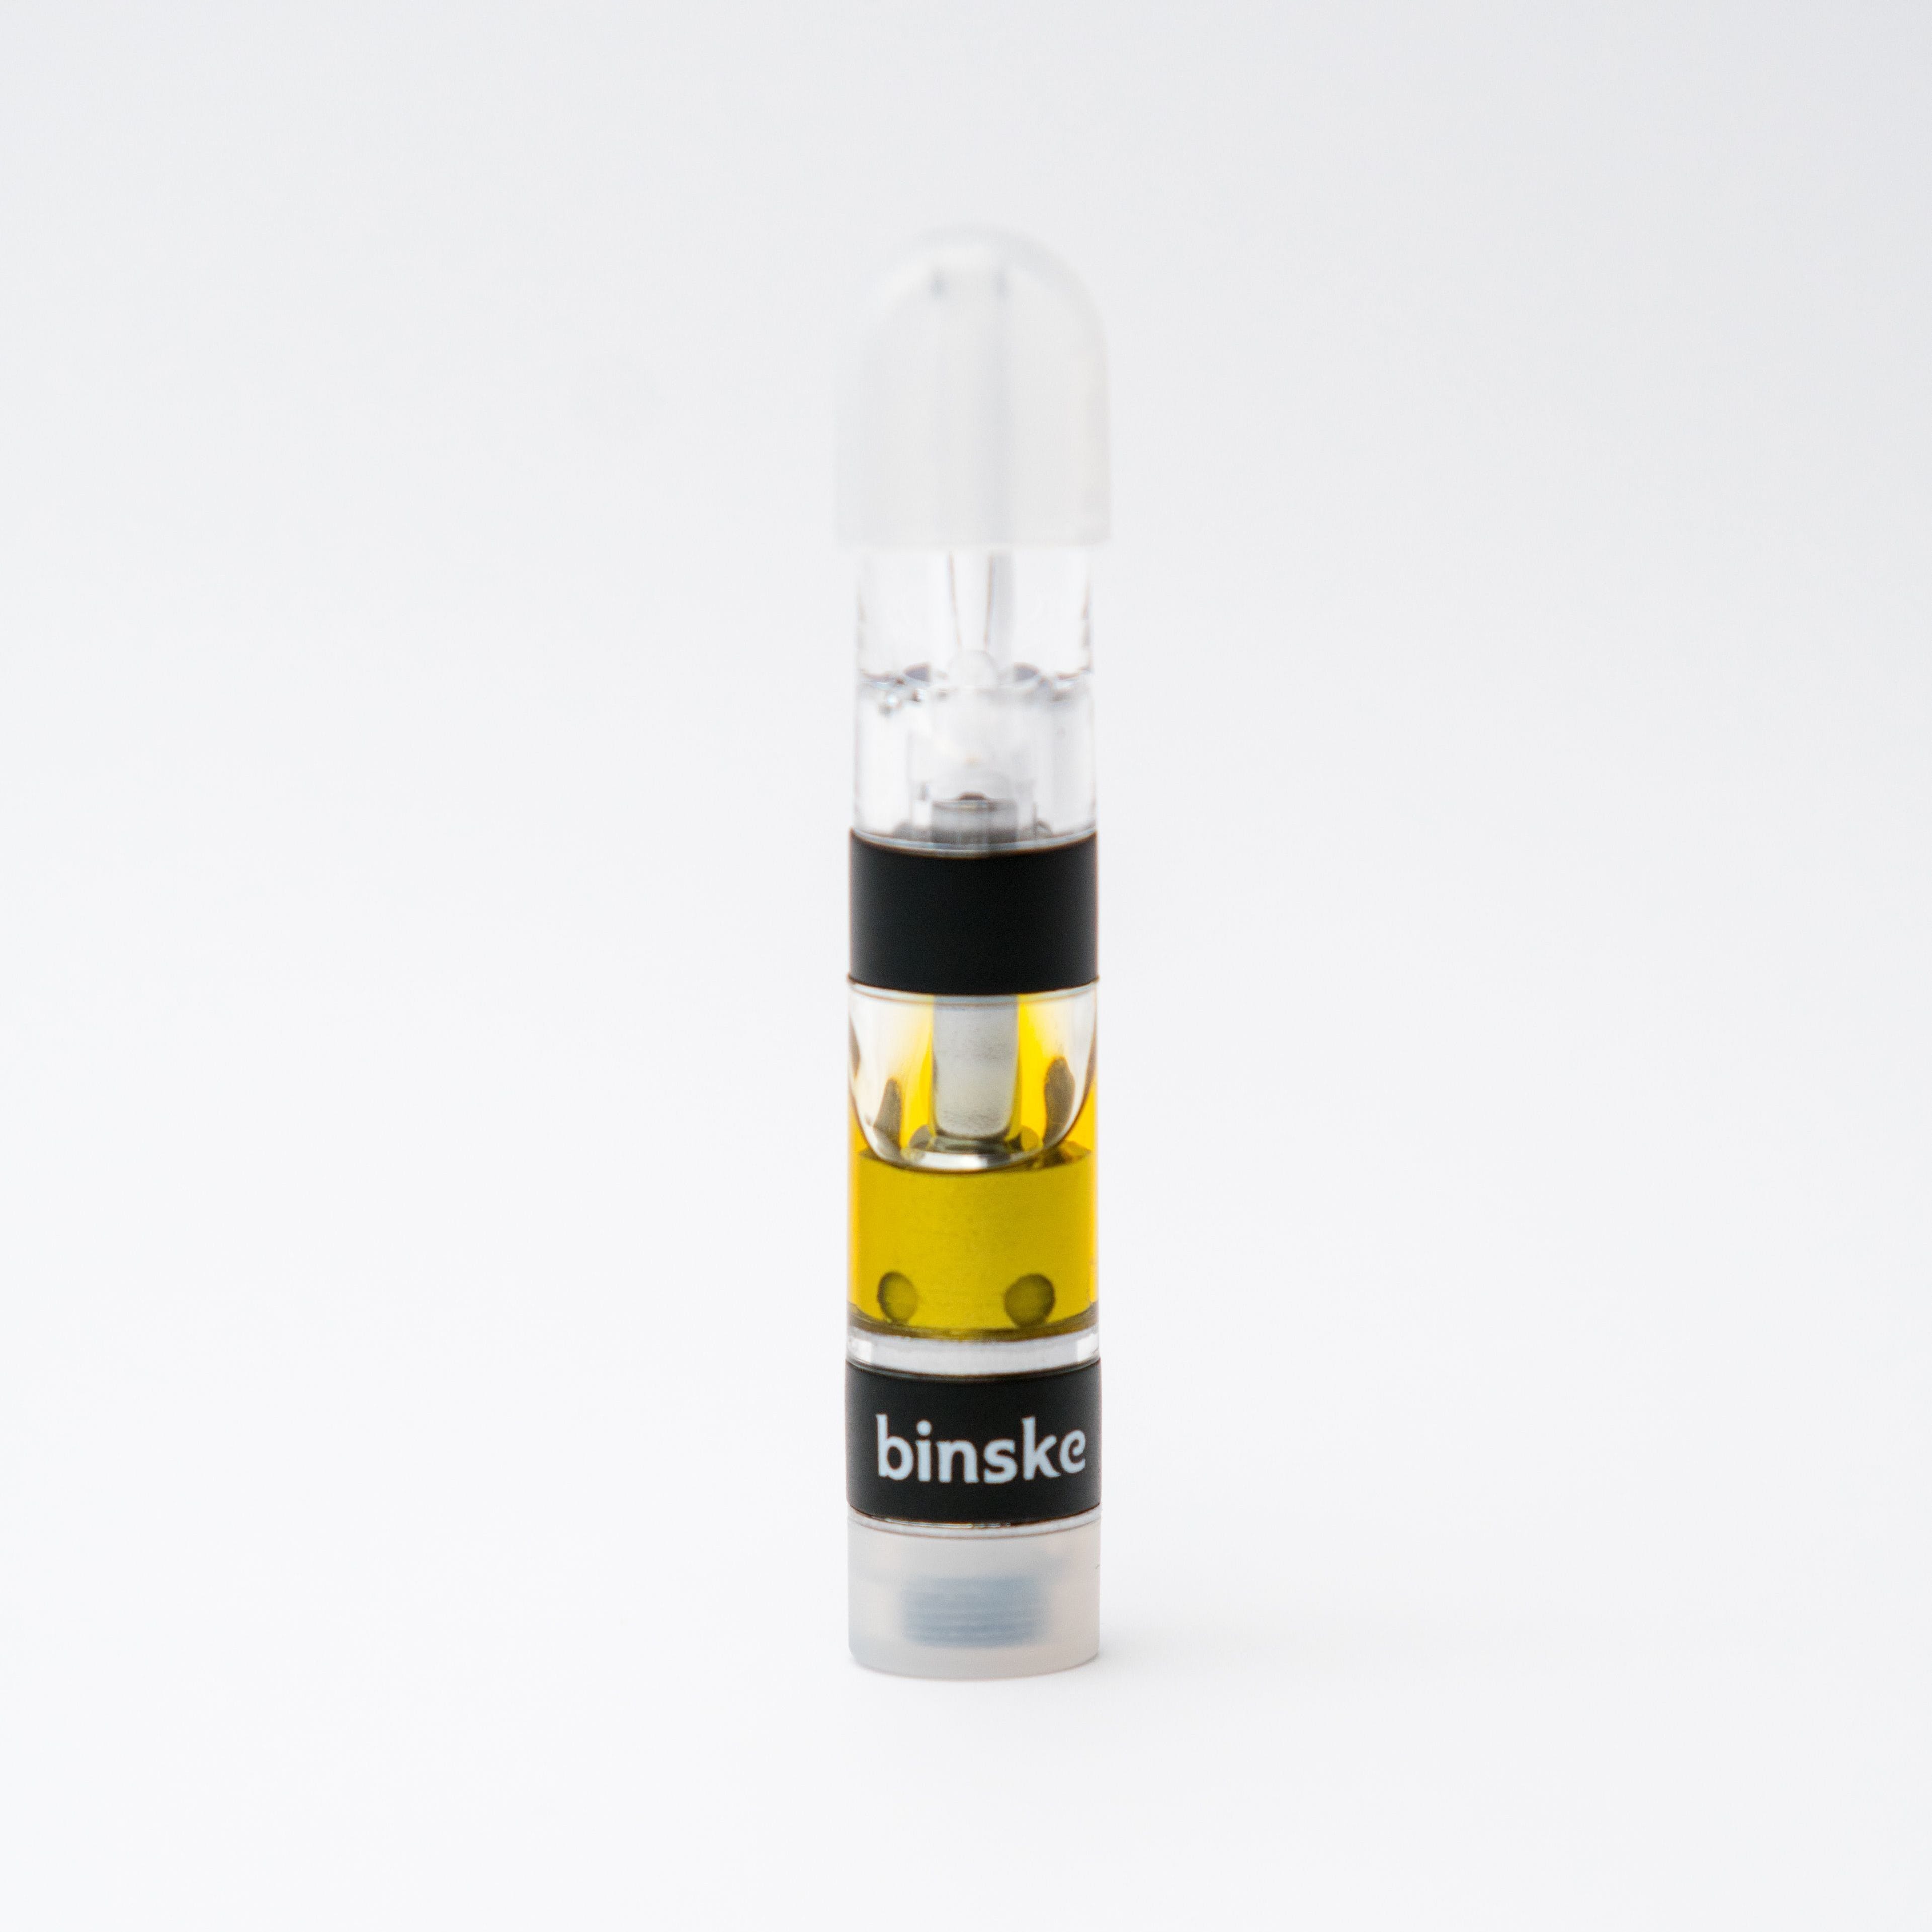 Binske Live Resin Cartridge